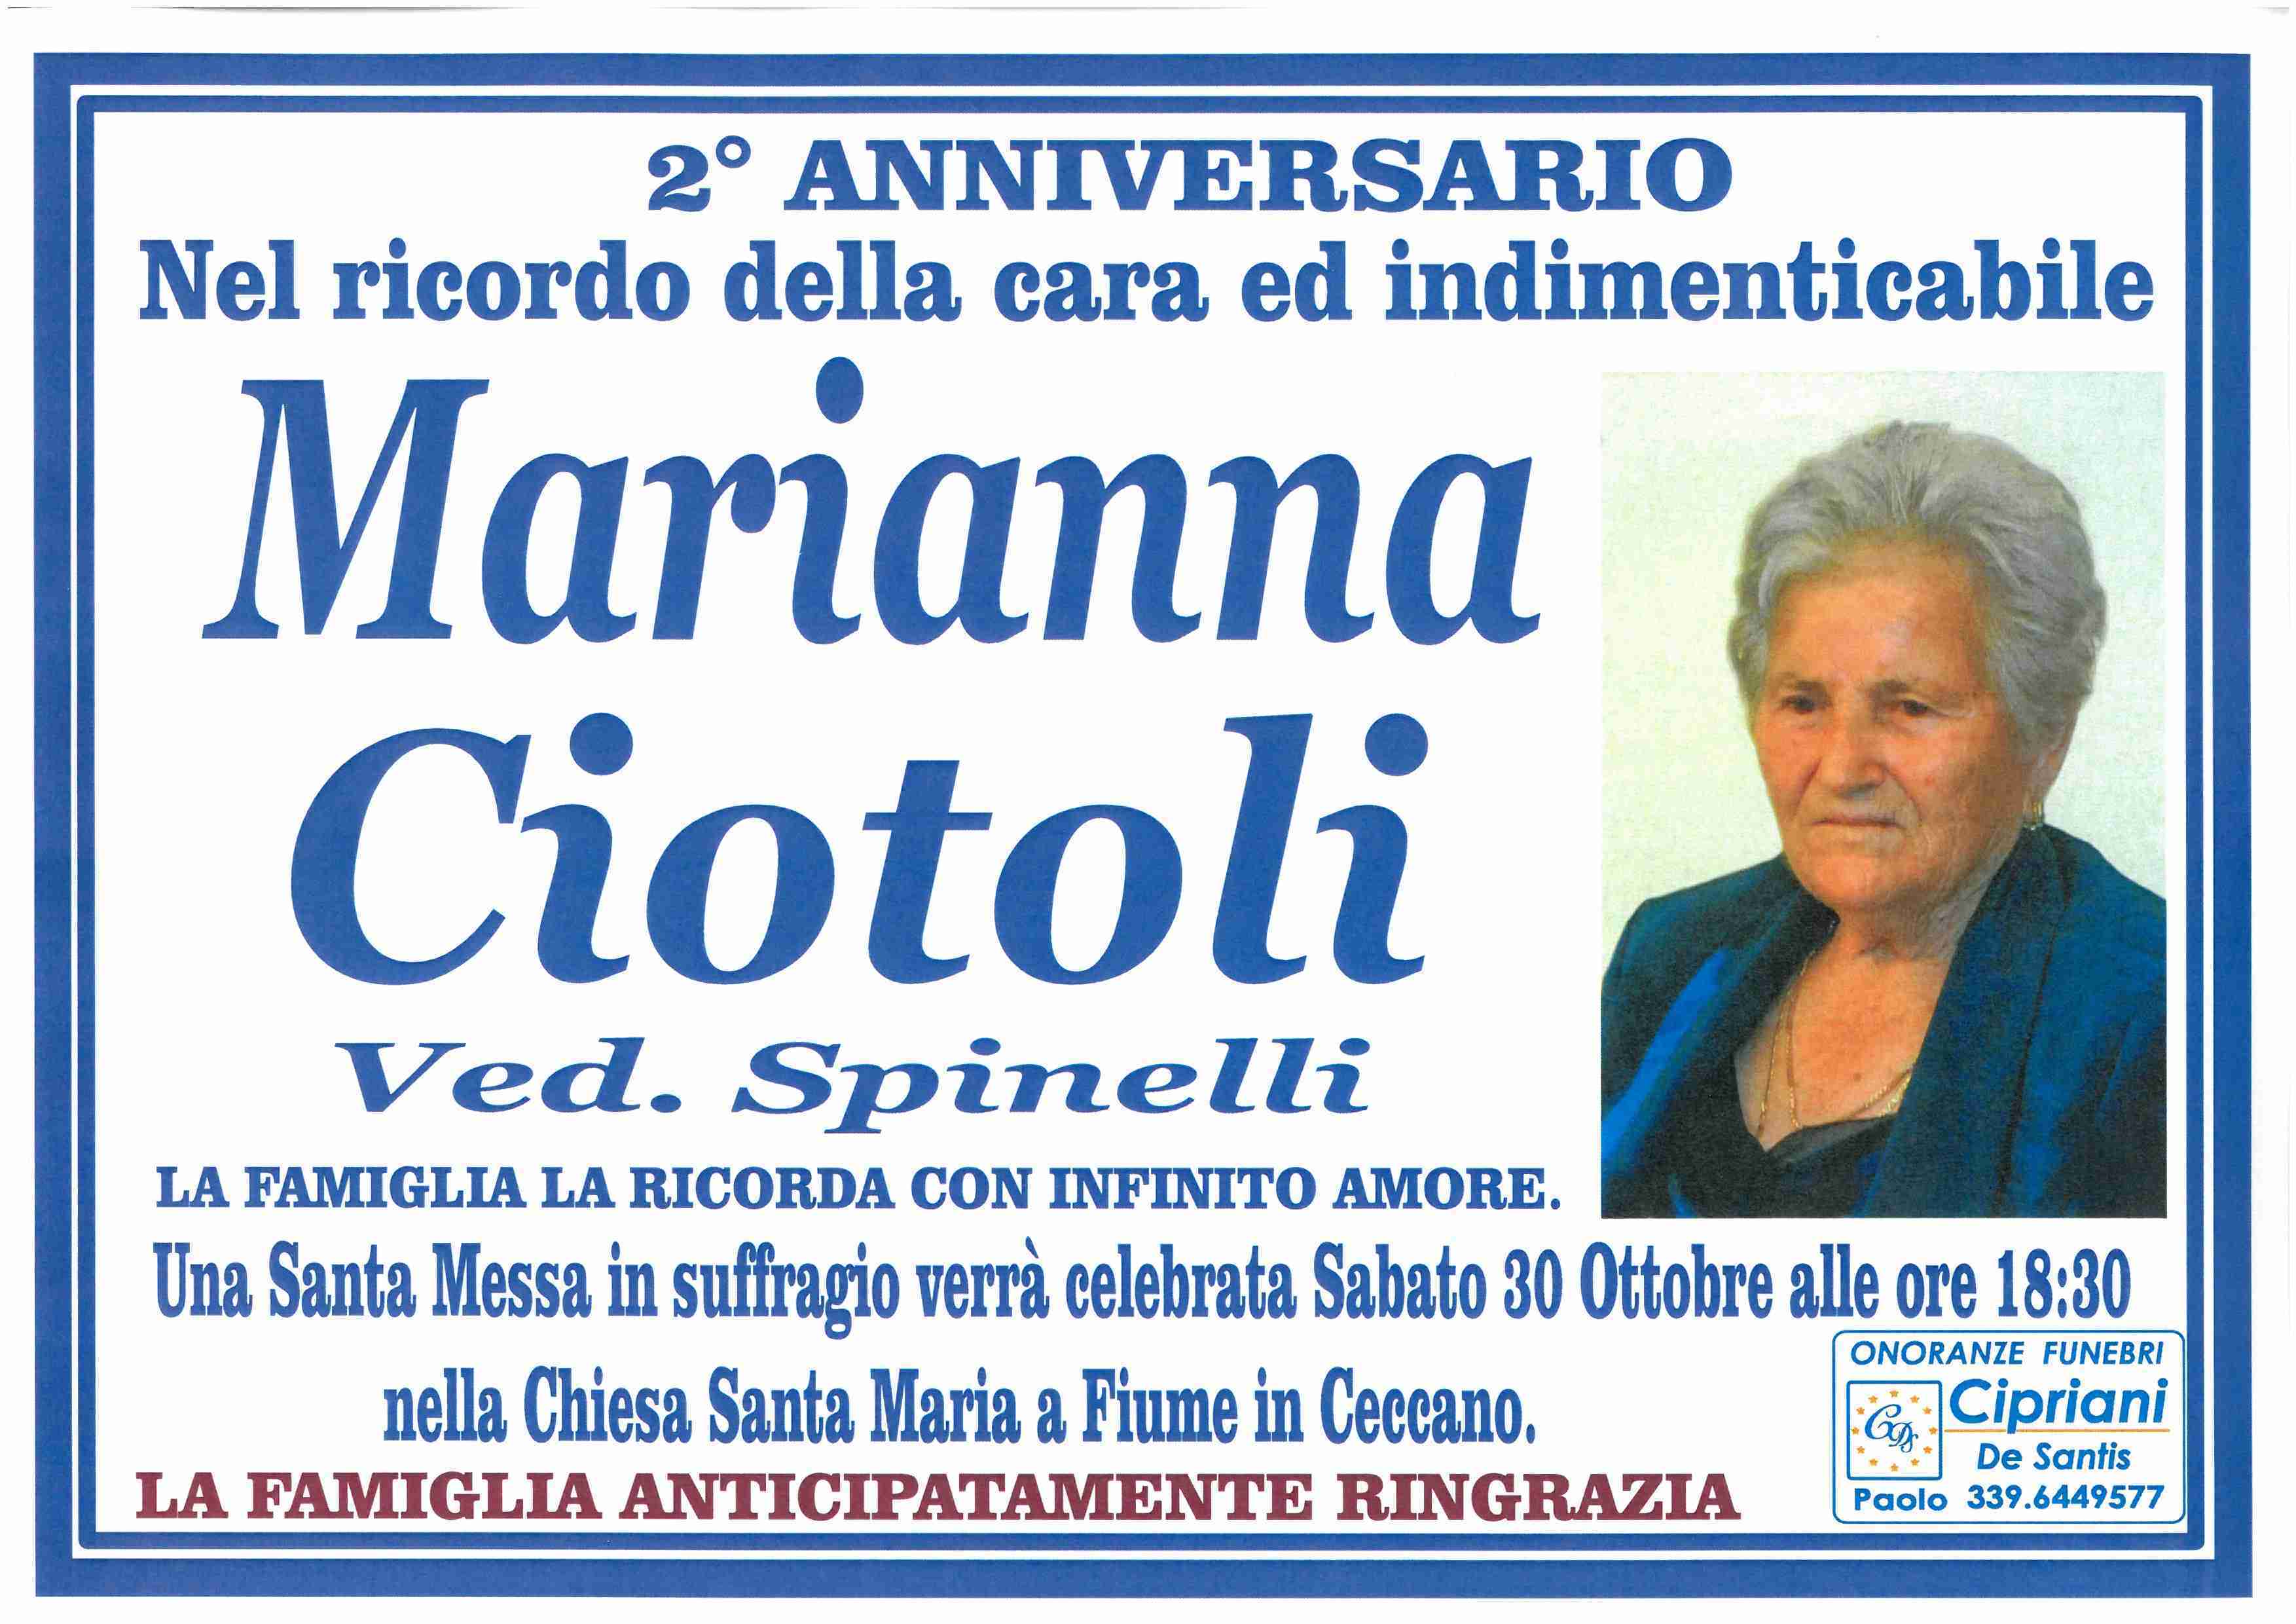 Marianna Ciotoli